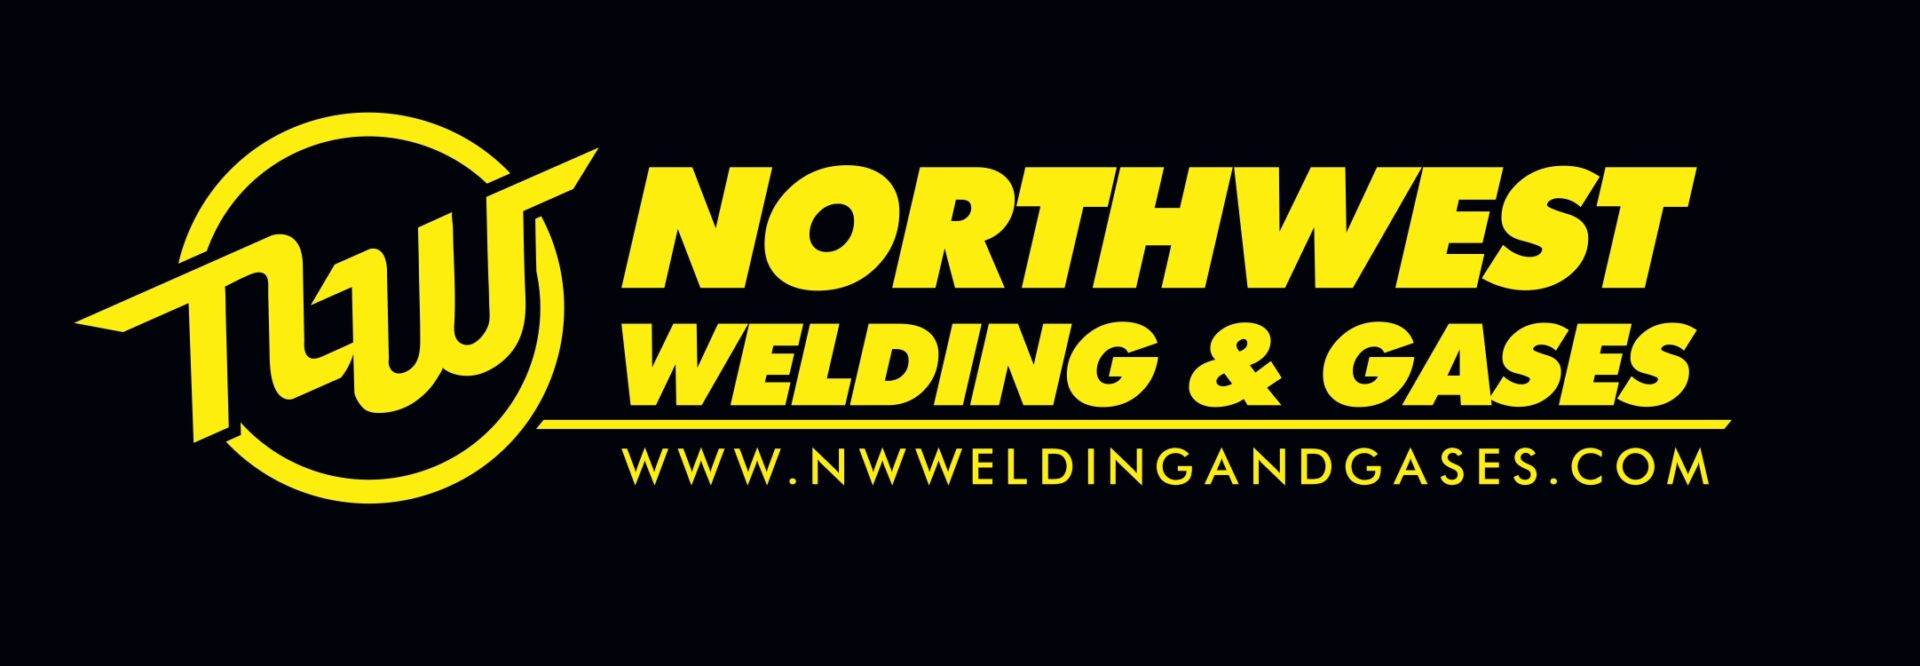 northwest welding logo decal_page-0001